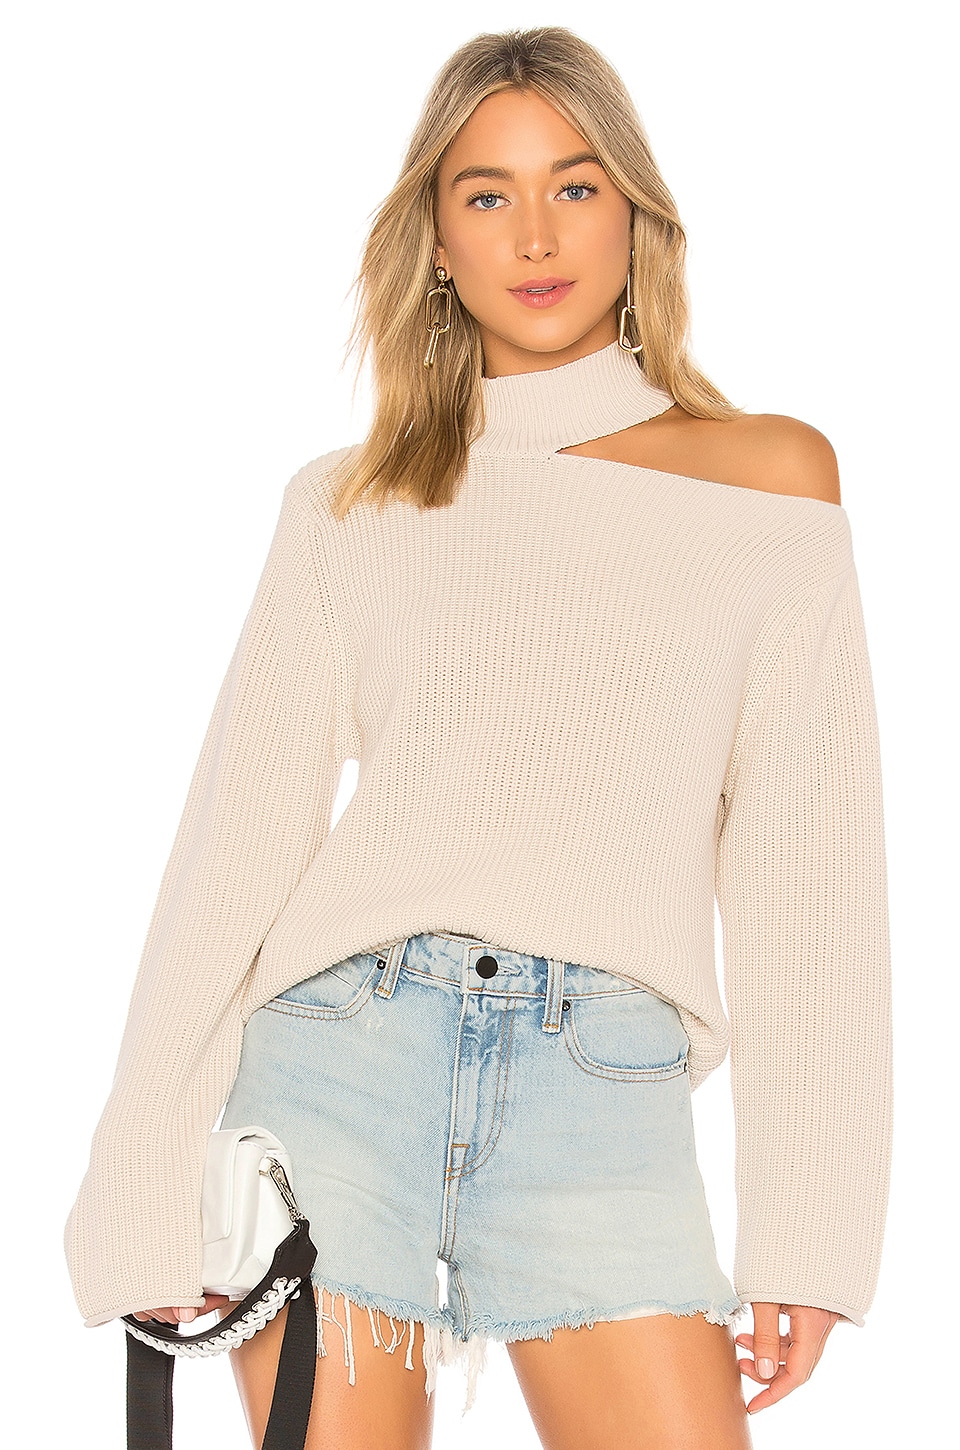 RTA Langley Sweater in Vintage White | REVOLVE